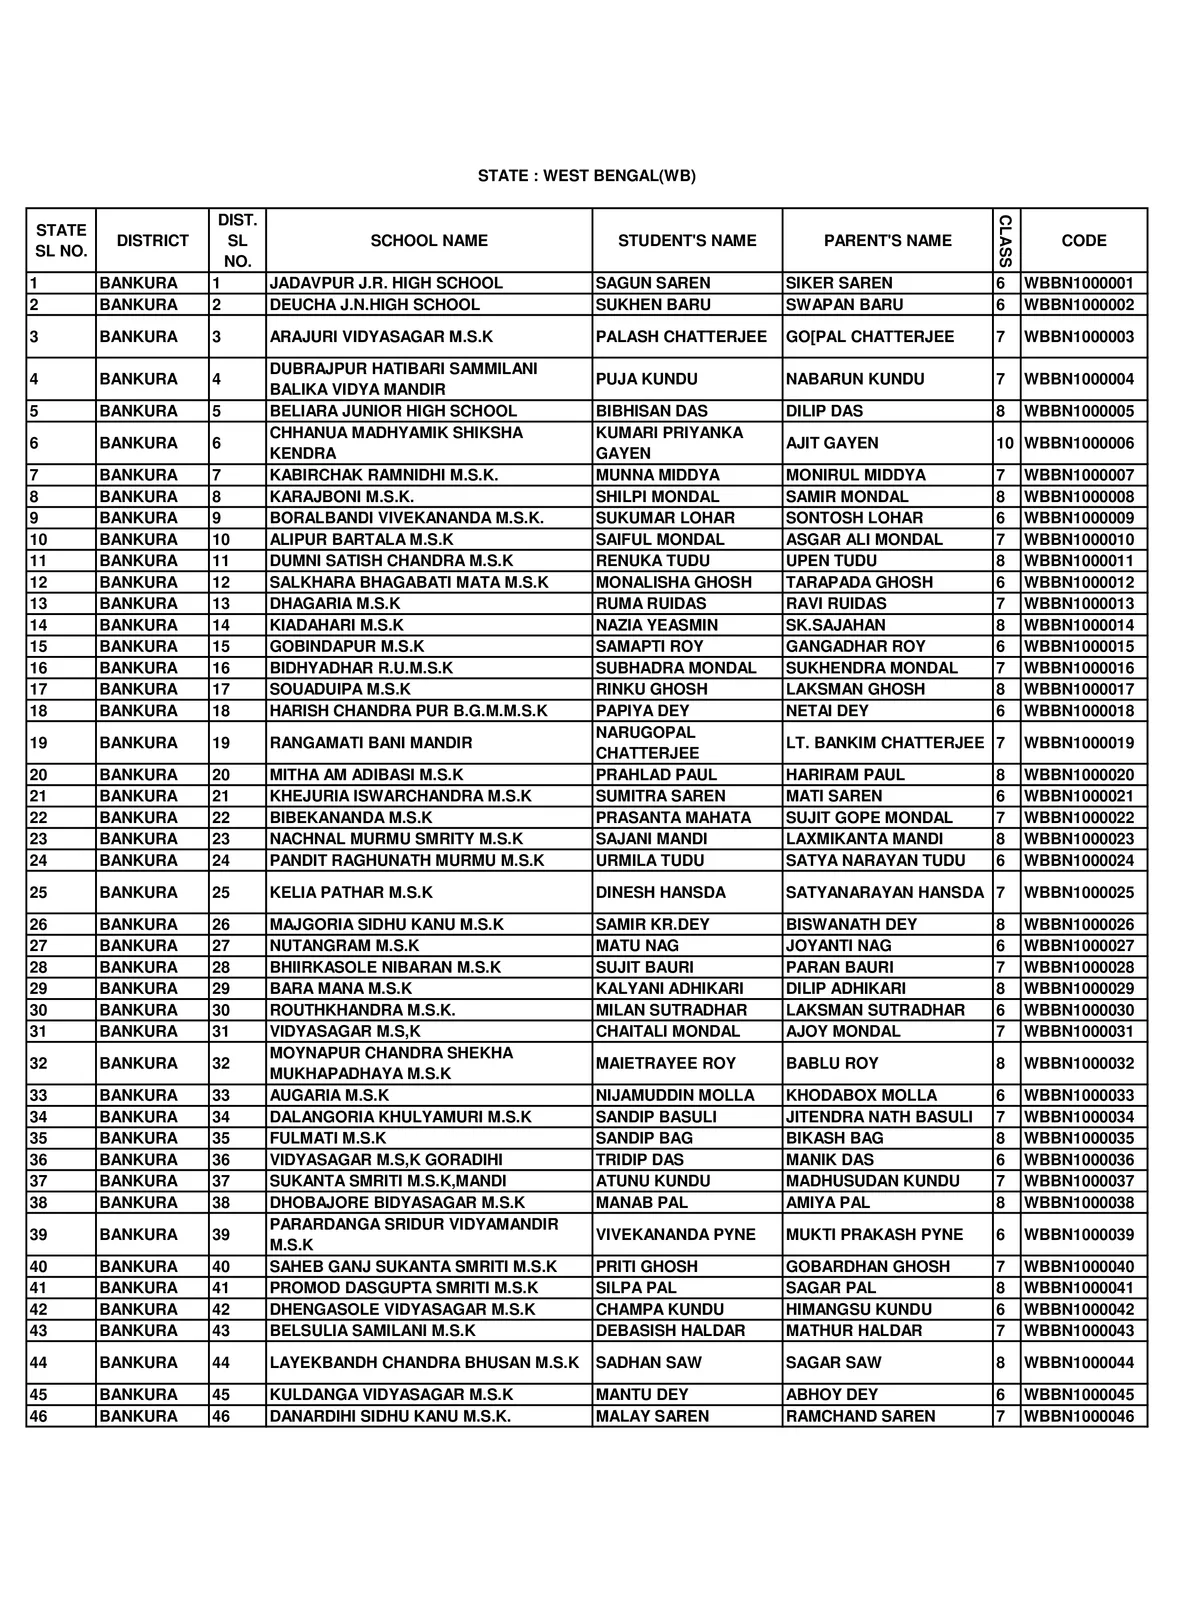 West Bengal Higher Secondary School List